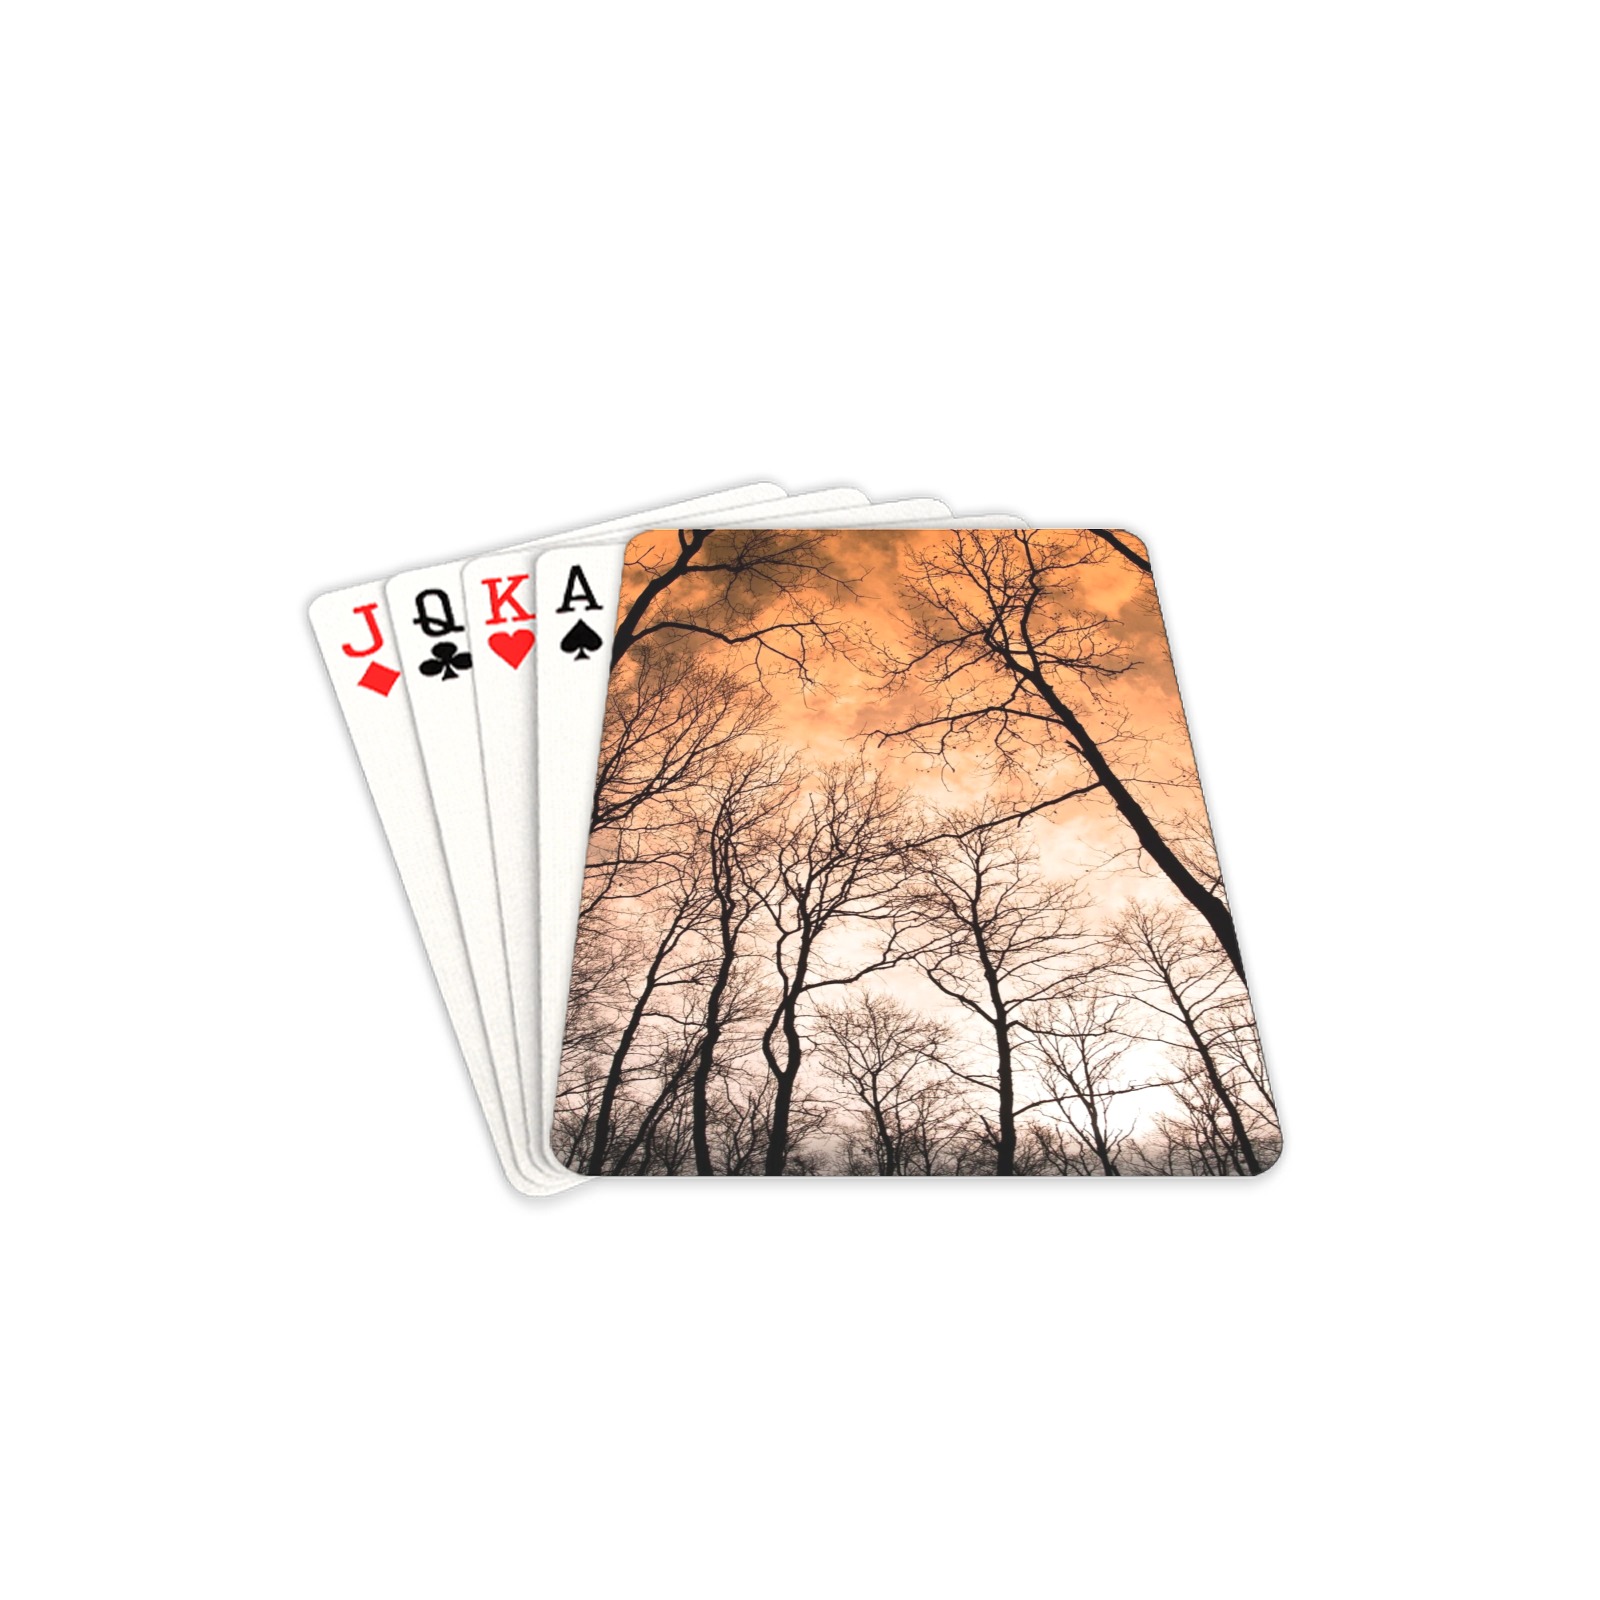 custom-playing-cards-2-5-x3-5-inch